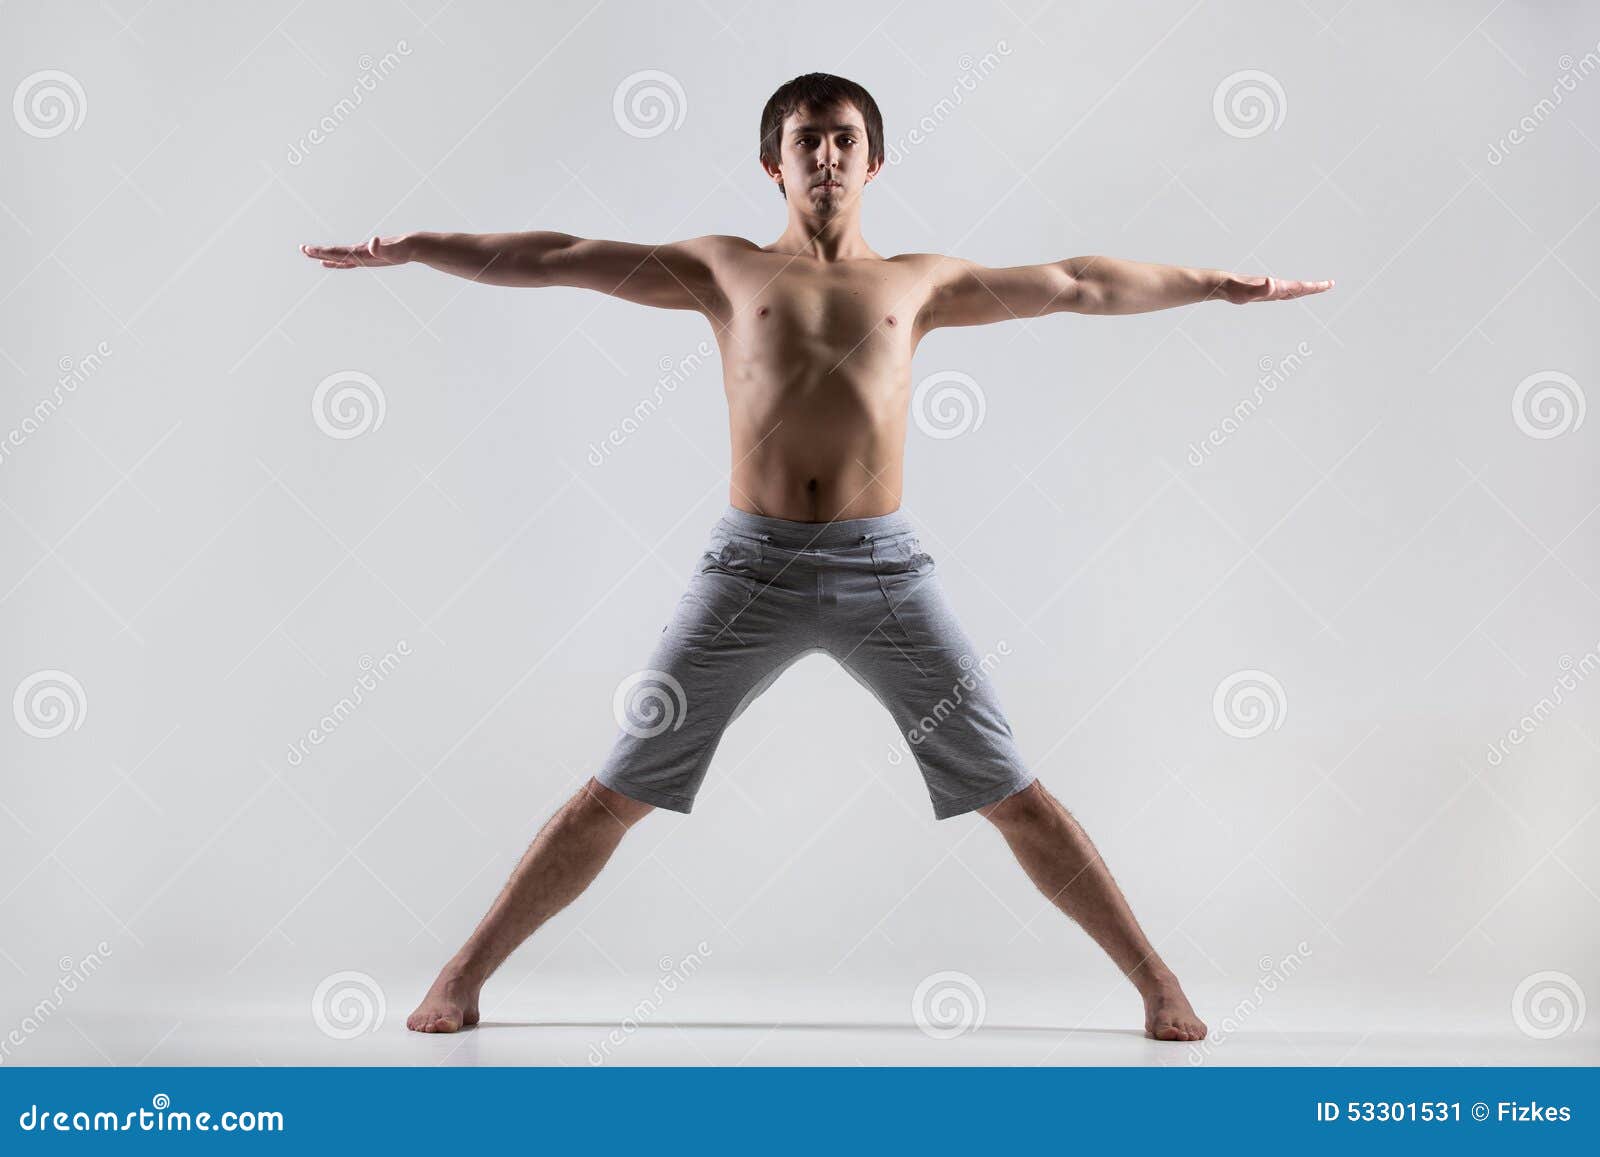 utthita tadasana yoga pose